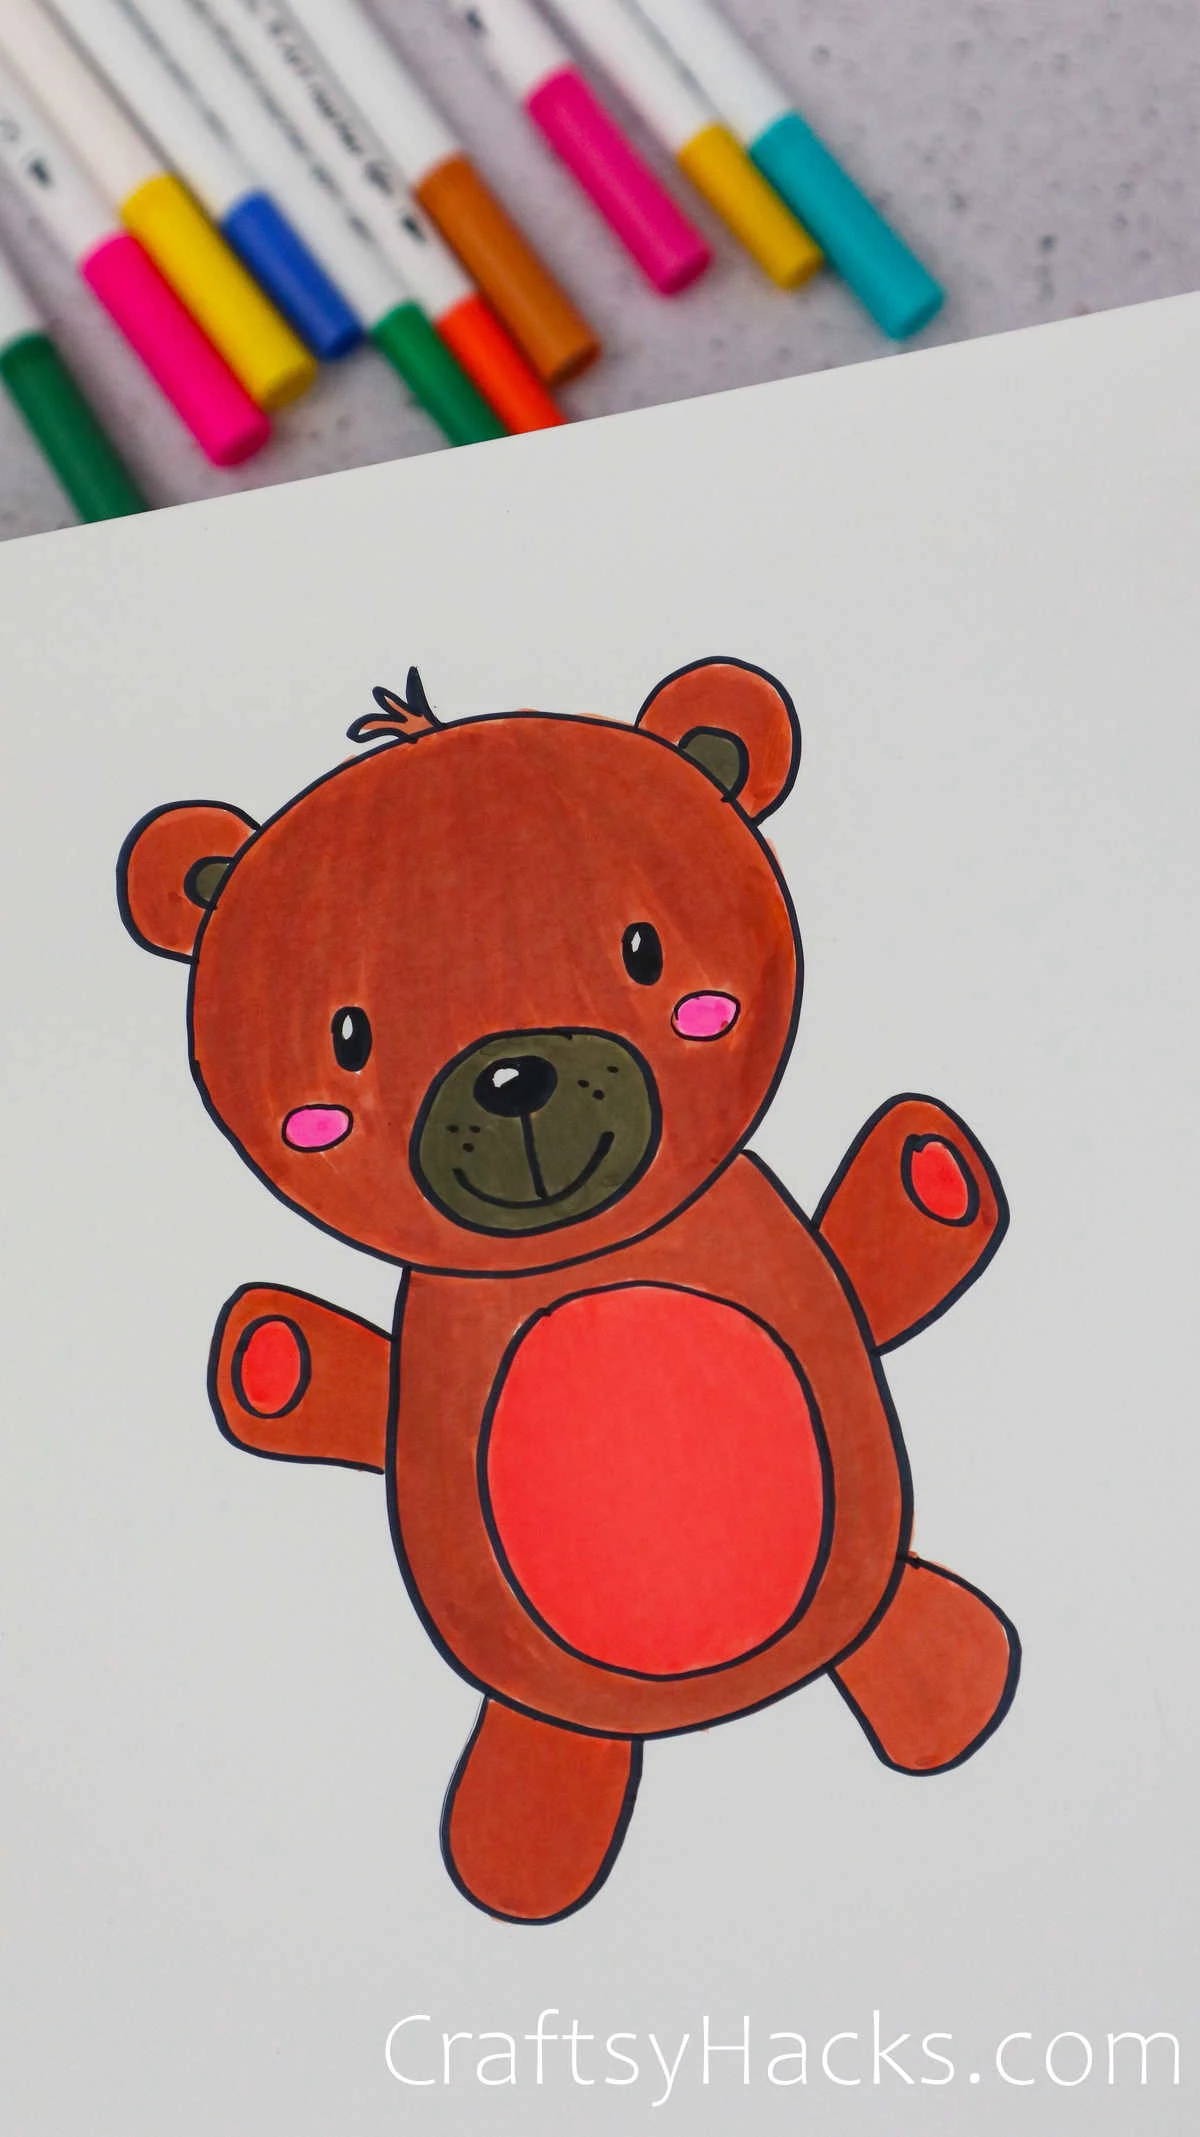 Cartoon Club - Online Drawing Class for Kids - SJ.Vickery Designs Ltd.-saigonsouth.com.vn